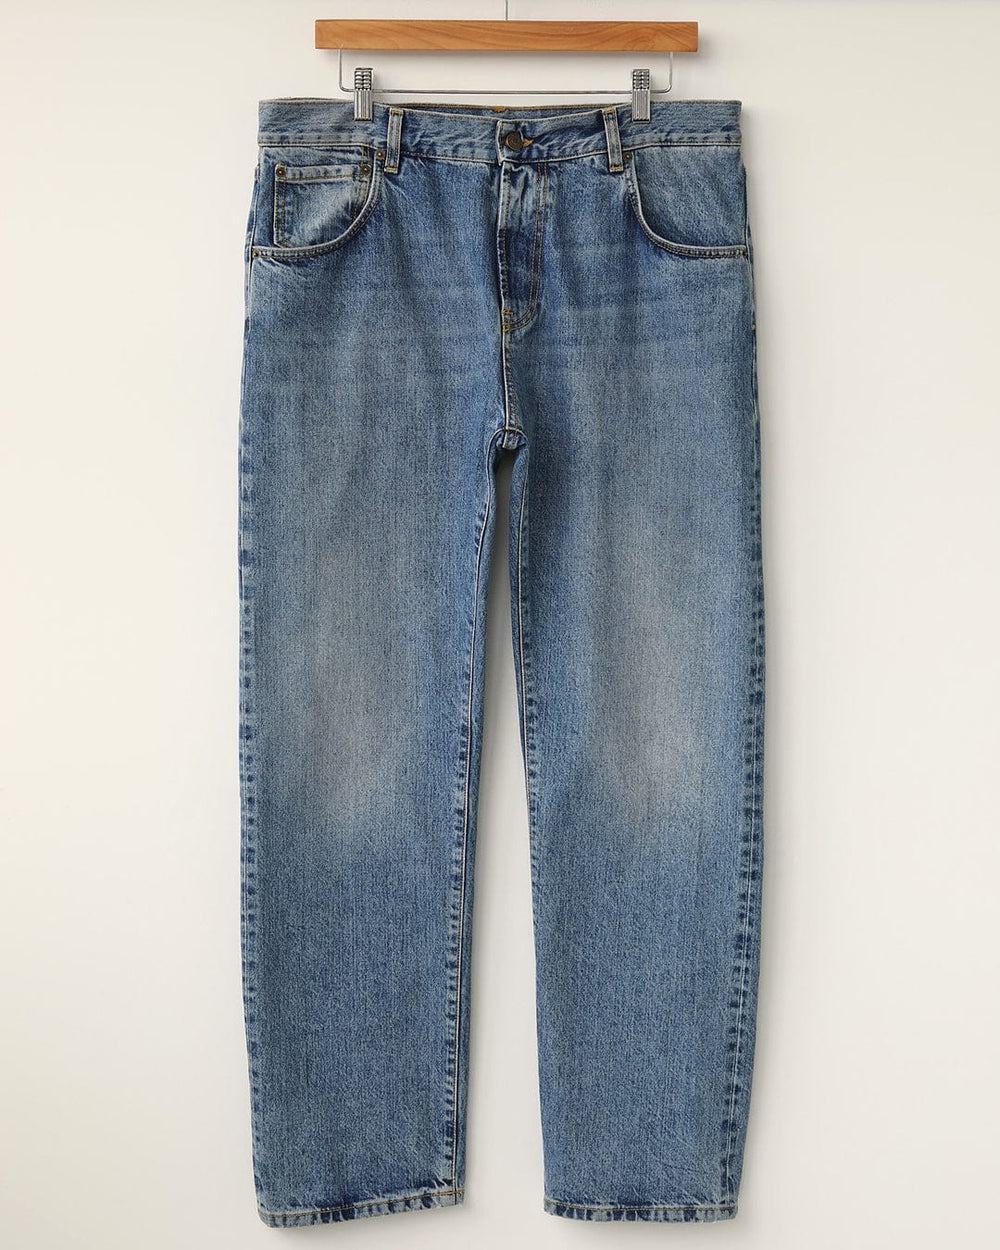 Organic Italian - 5 Pocket Jean - Washed-Jeans-Corridor-Corridor